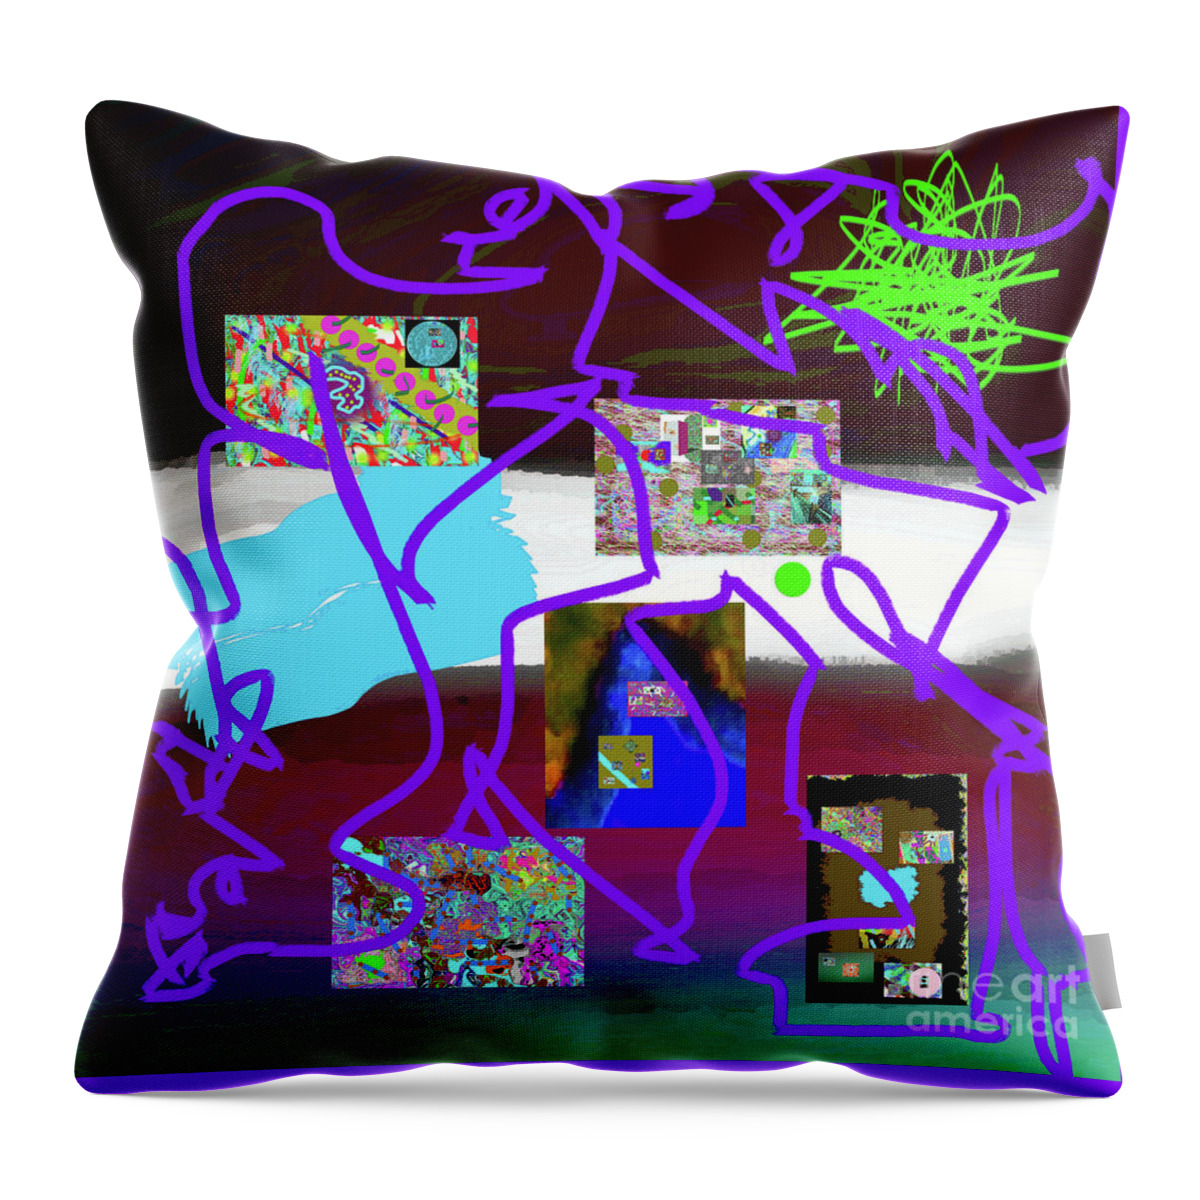 Walter Paul Bebirian Throw Pillow featuring the digital art 6-27-2015cabcdefghijklmn by Walter Paul Bebirian